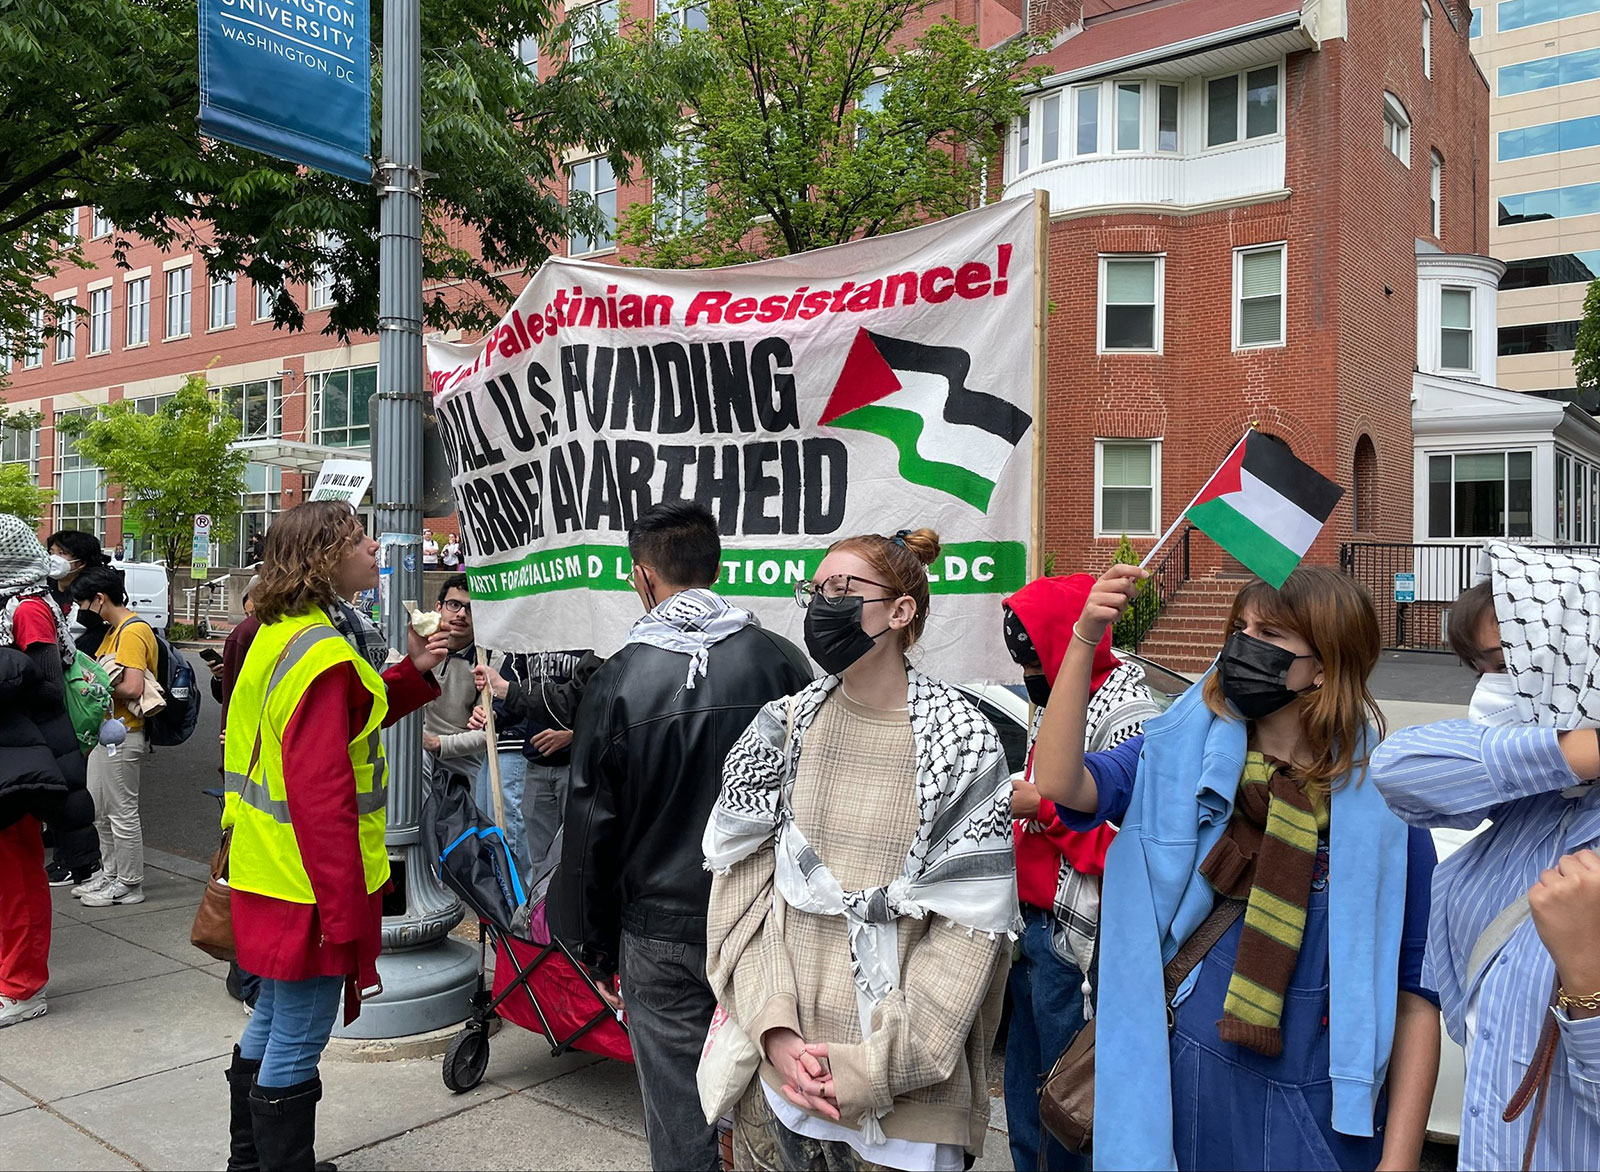 Protesters rally at George Washington University on Thursday in Washington, DC.